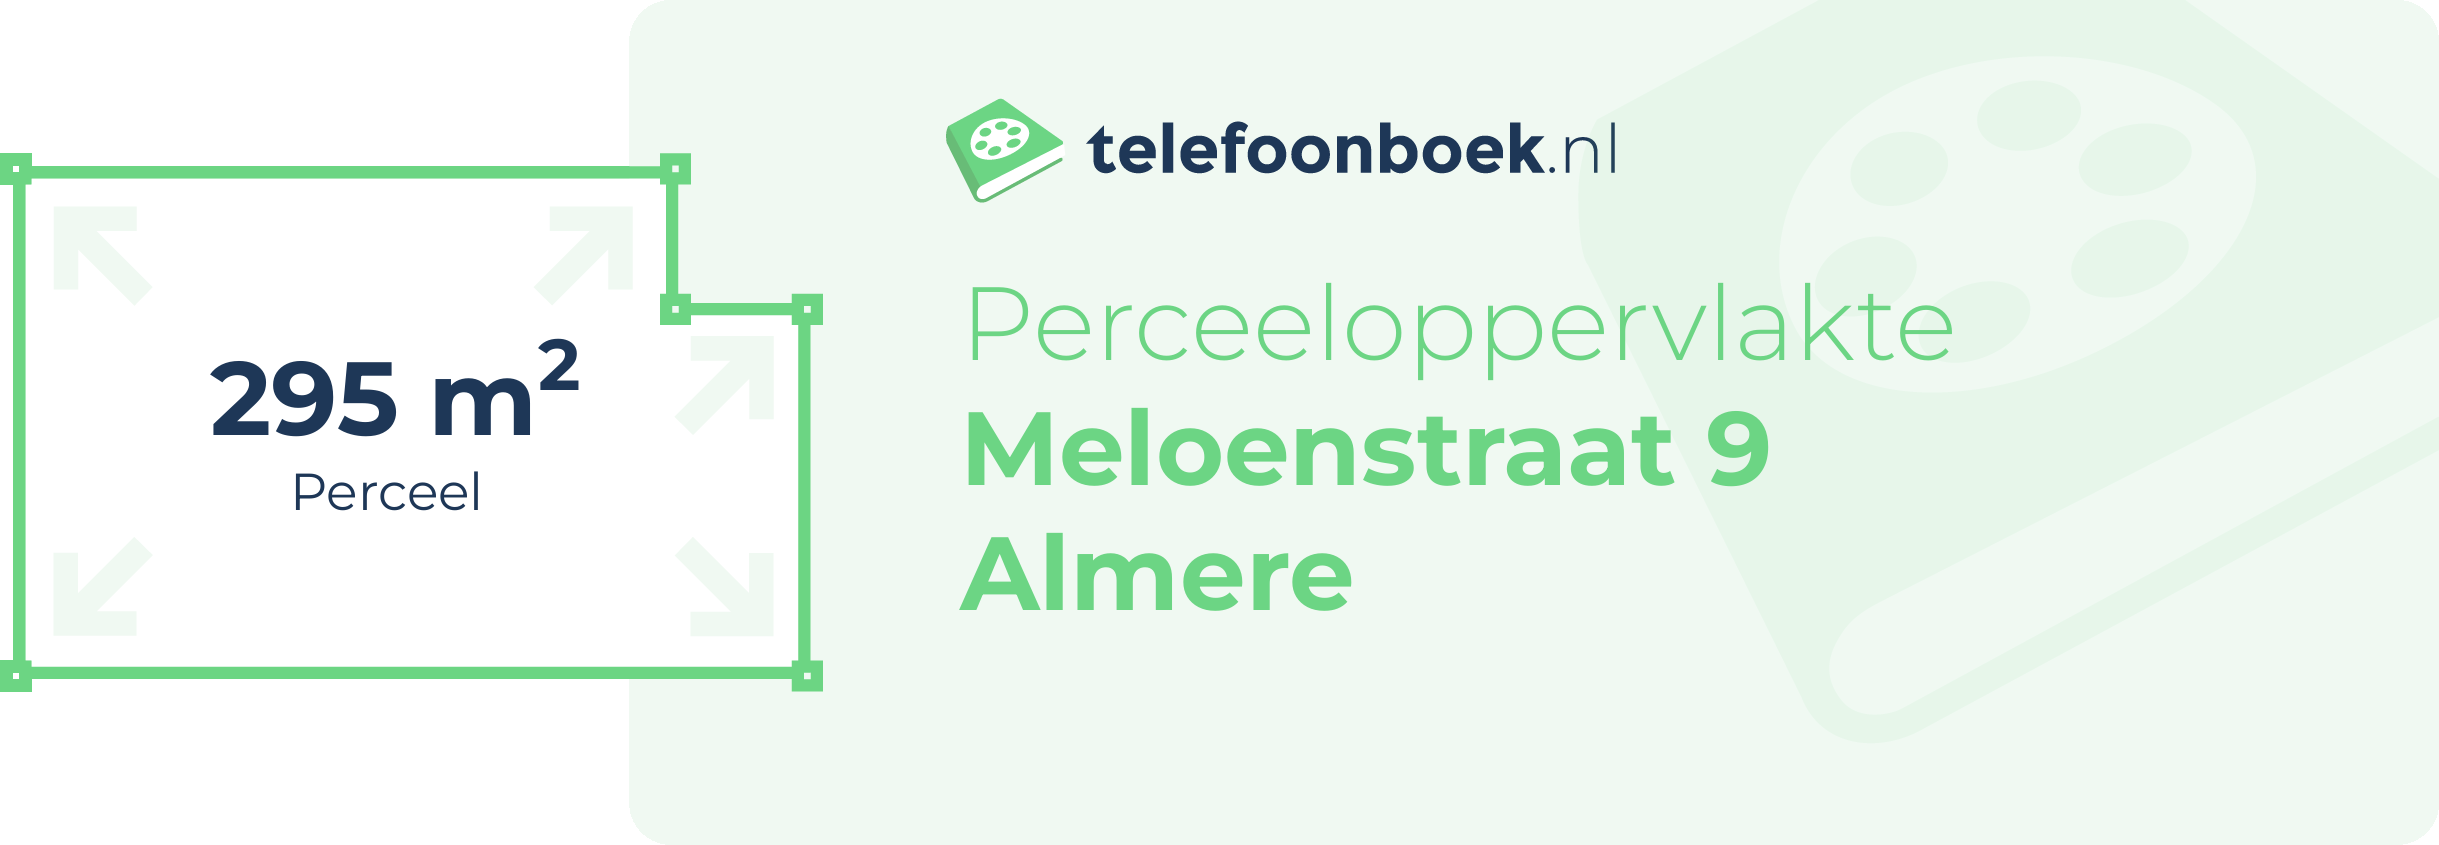 Perceeloppervlakte Meloenstraat 9 Almere